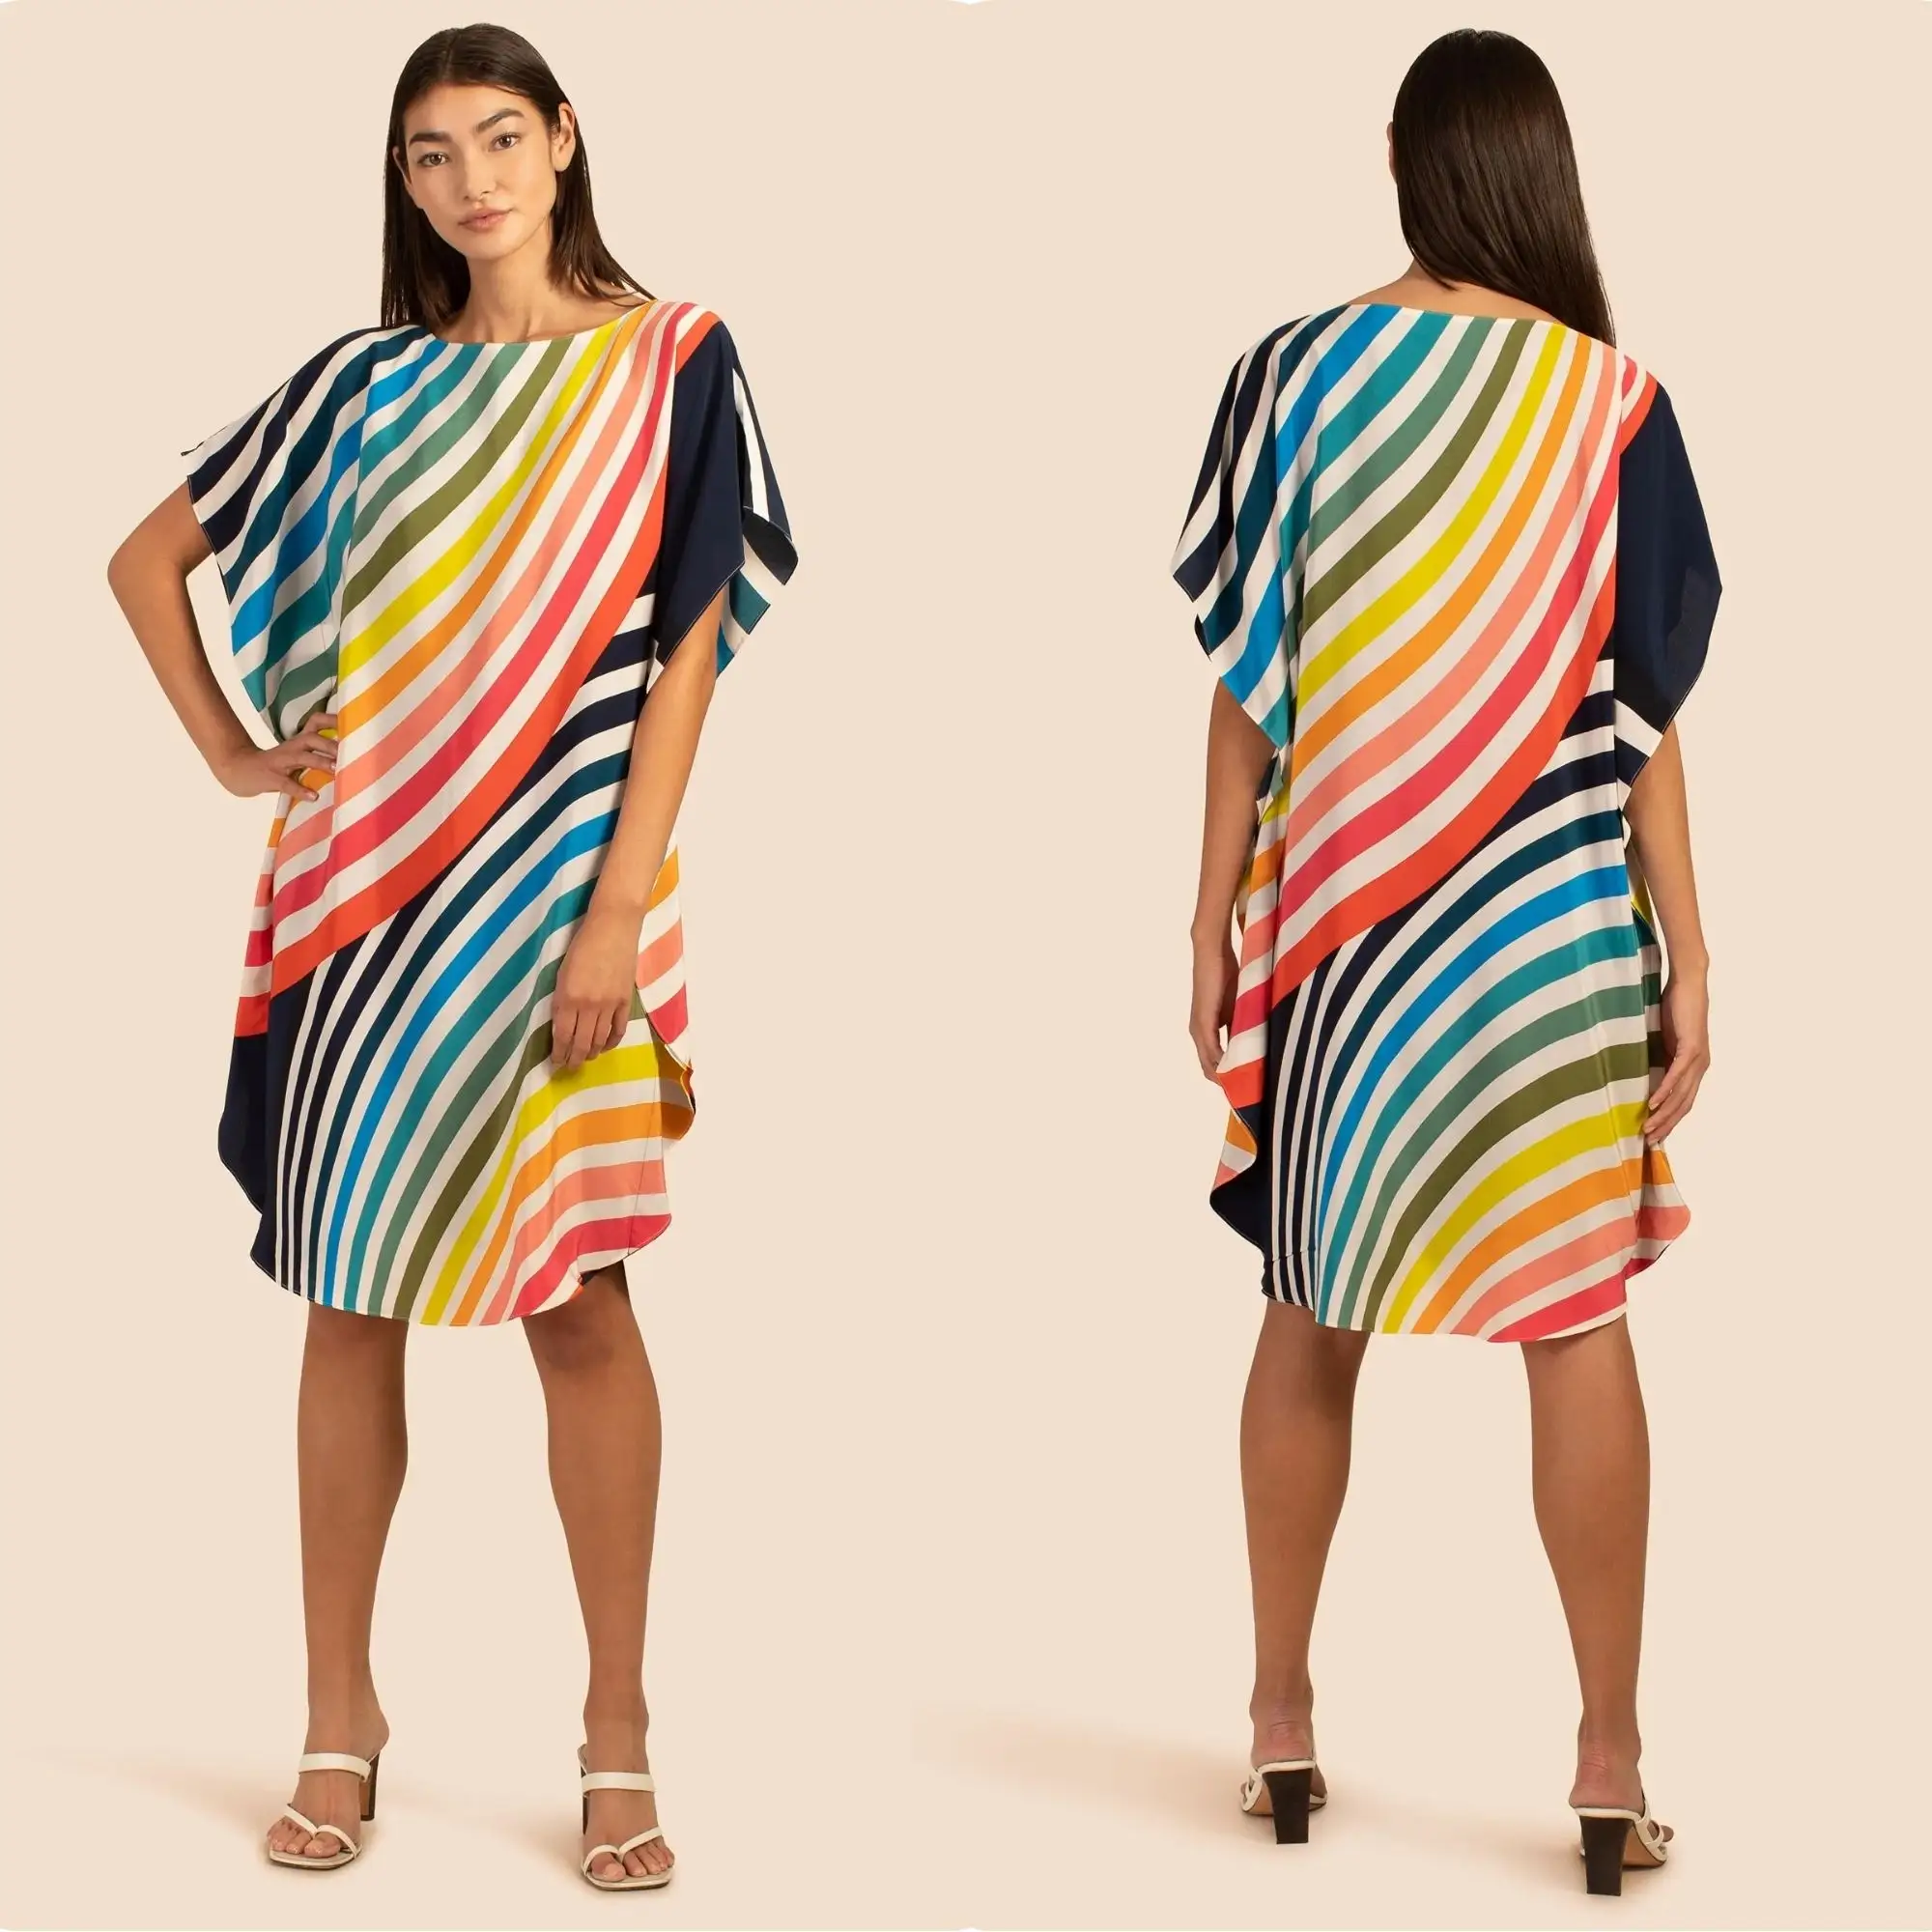 New Low Cost Circular Digital Printed Short Length Women Top Kaftan Dress (Customize Print Option Available)